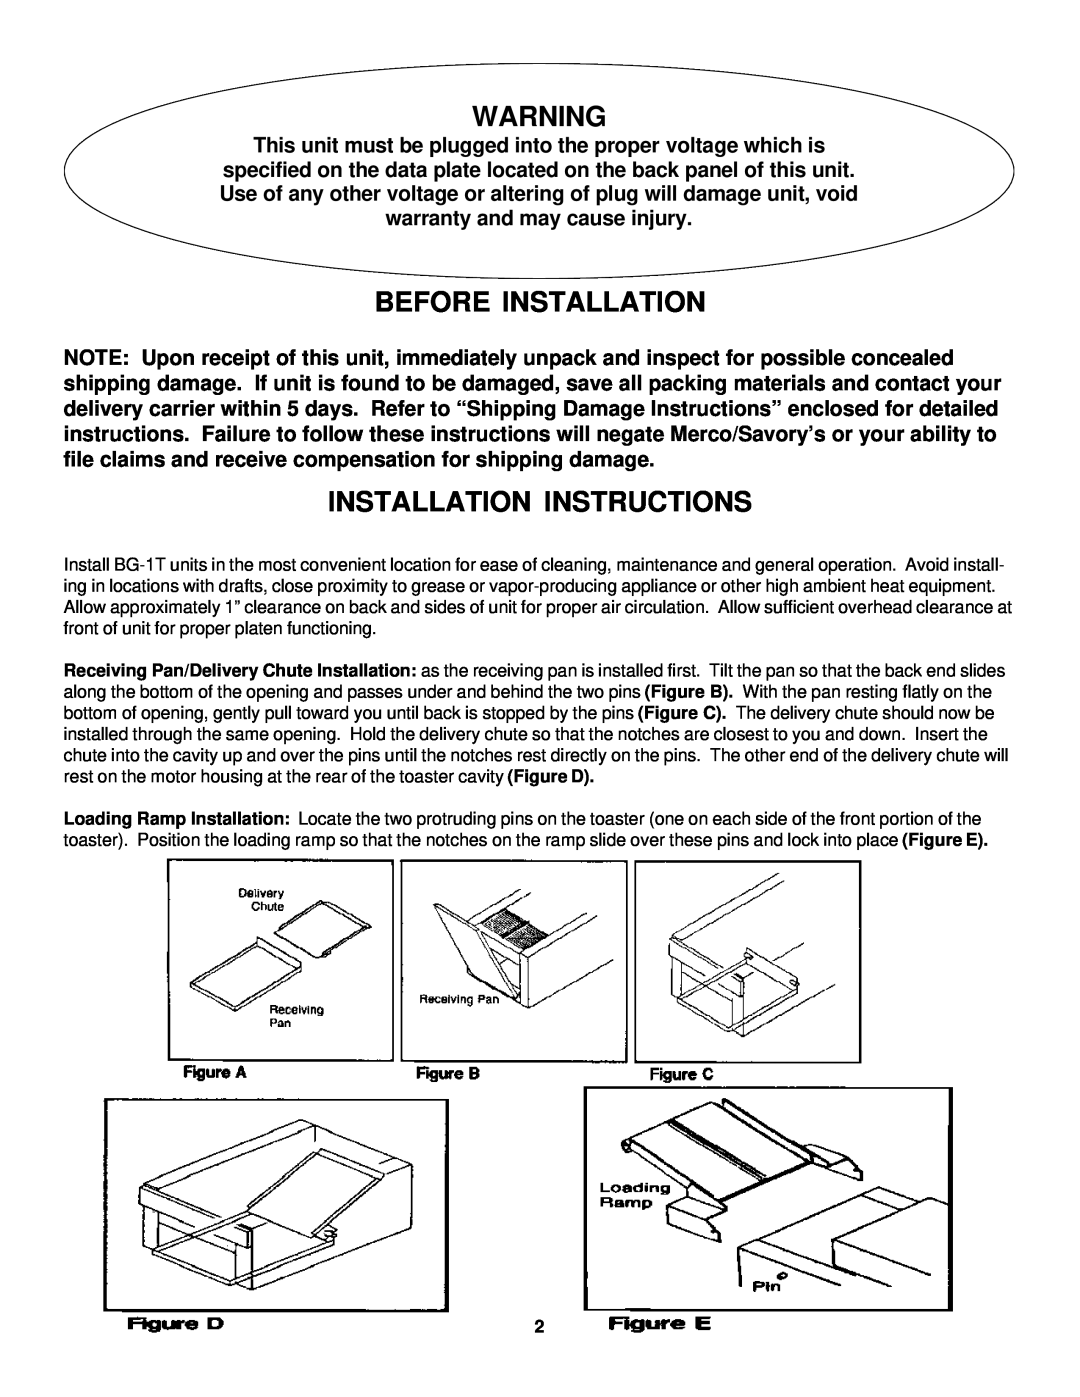 Merco Savory BG-1T operation manual Before Installation, Installation Instructions 